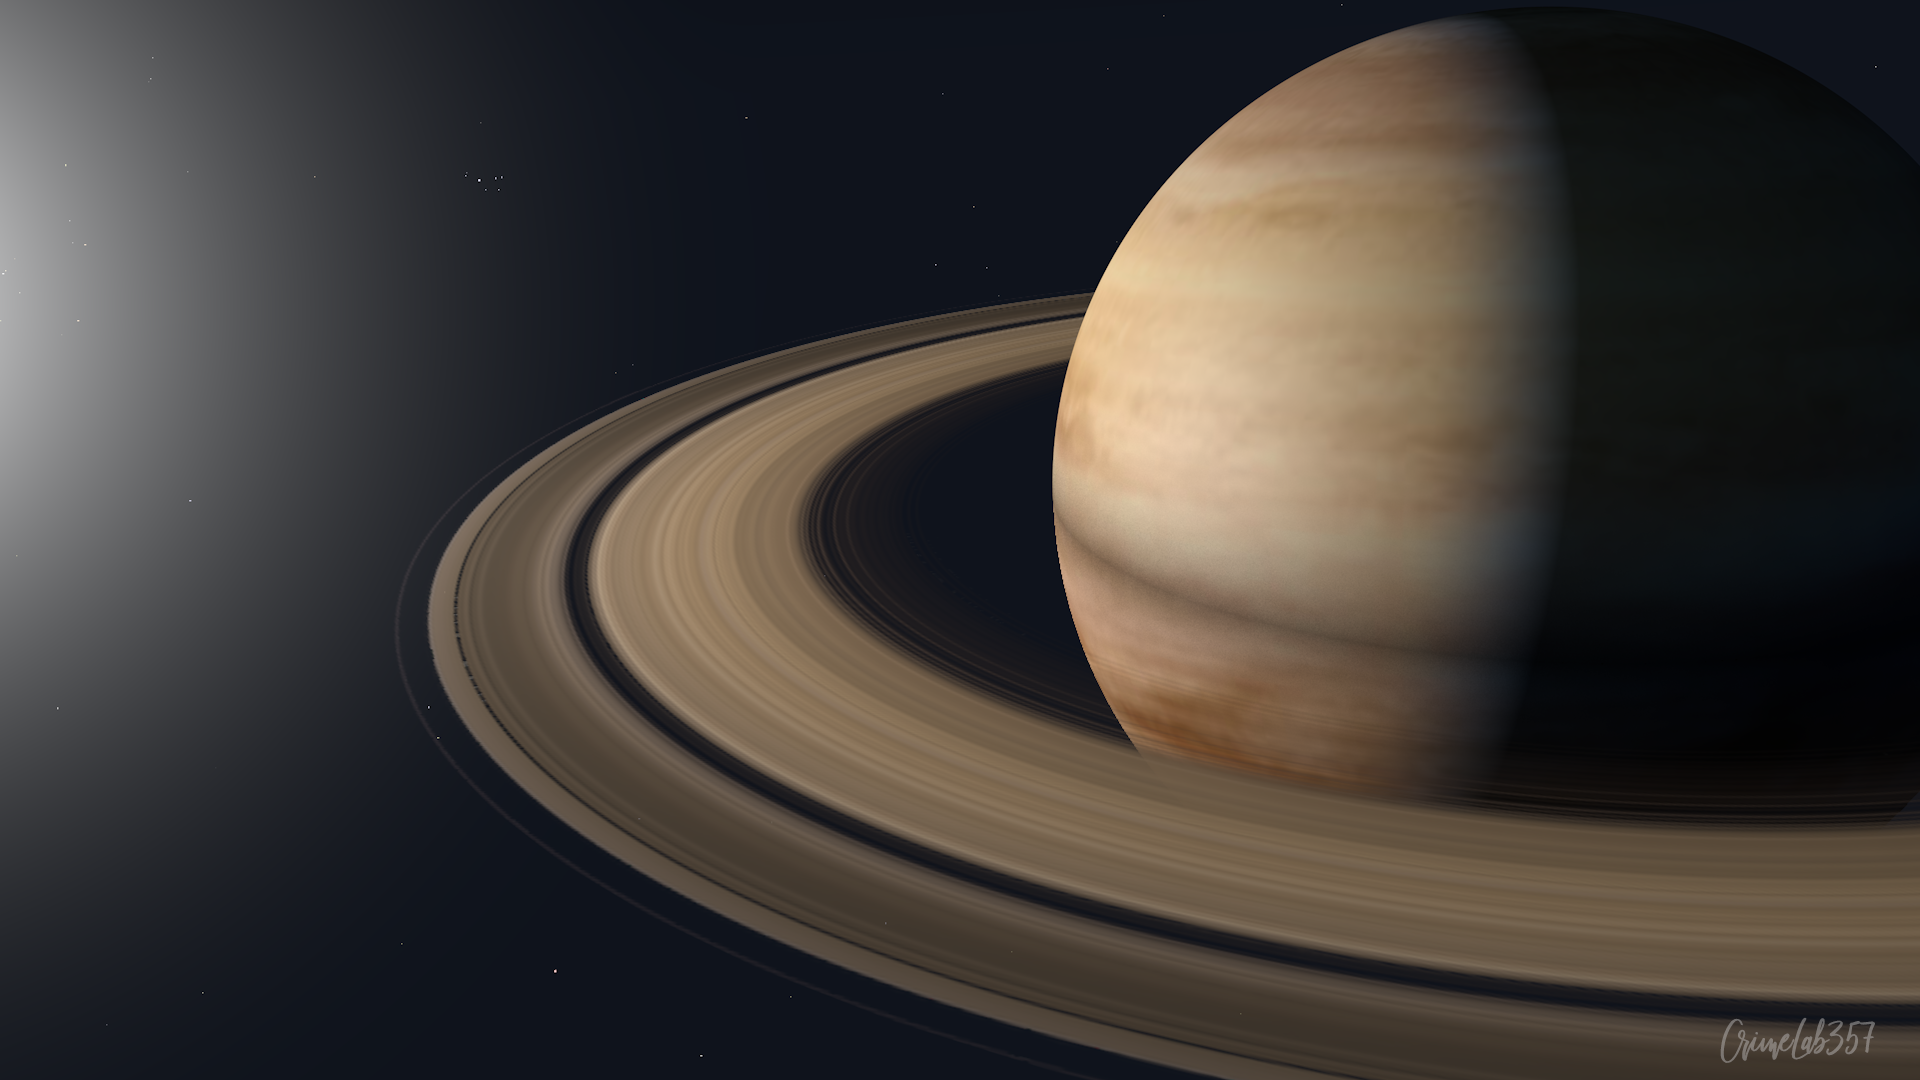 General 1920x1080 planet space watermarked CGI Saturn